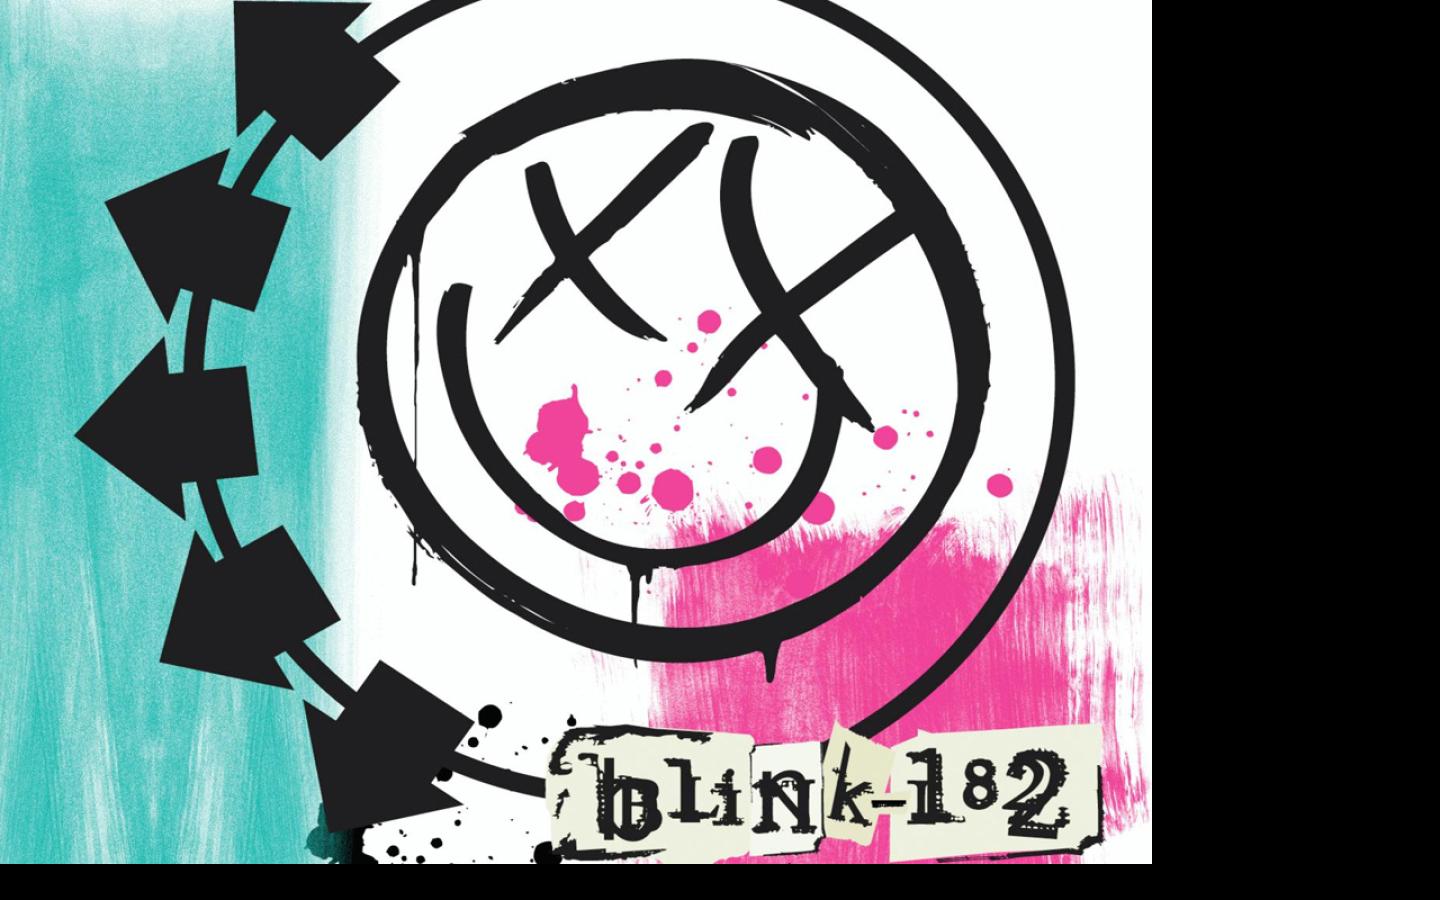 Blink 182 Wallpaper #3 1440 x 900 